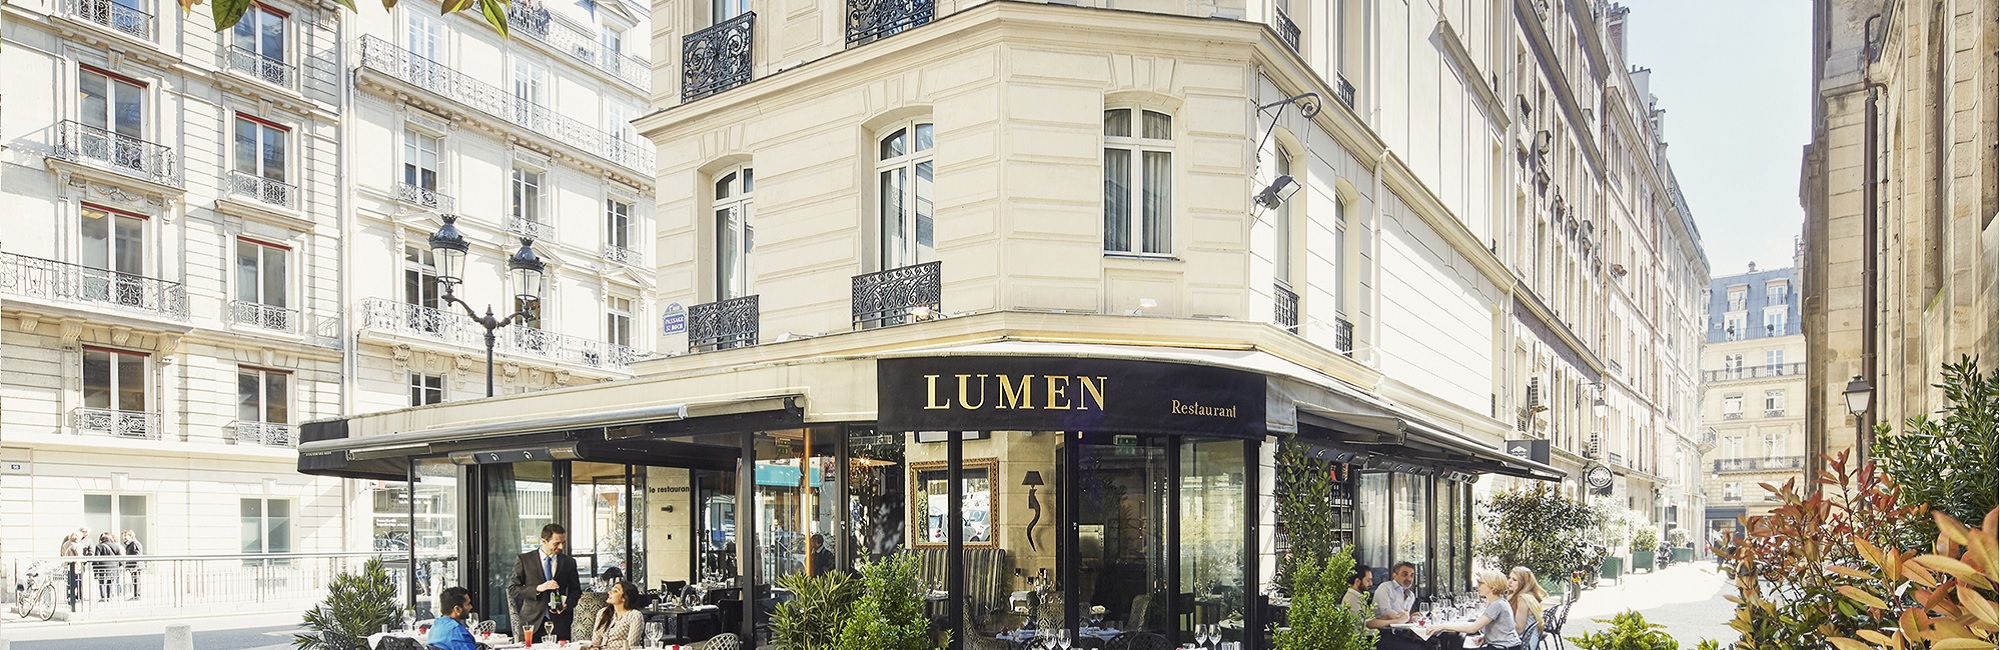 Lumen | Booking Hotel Discount | Paris Webservices